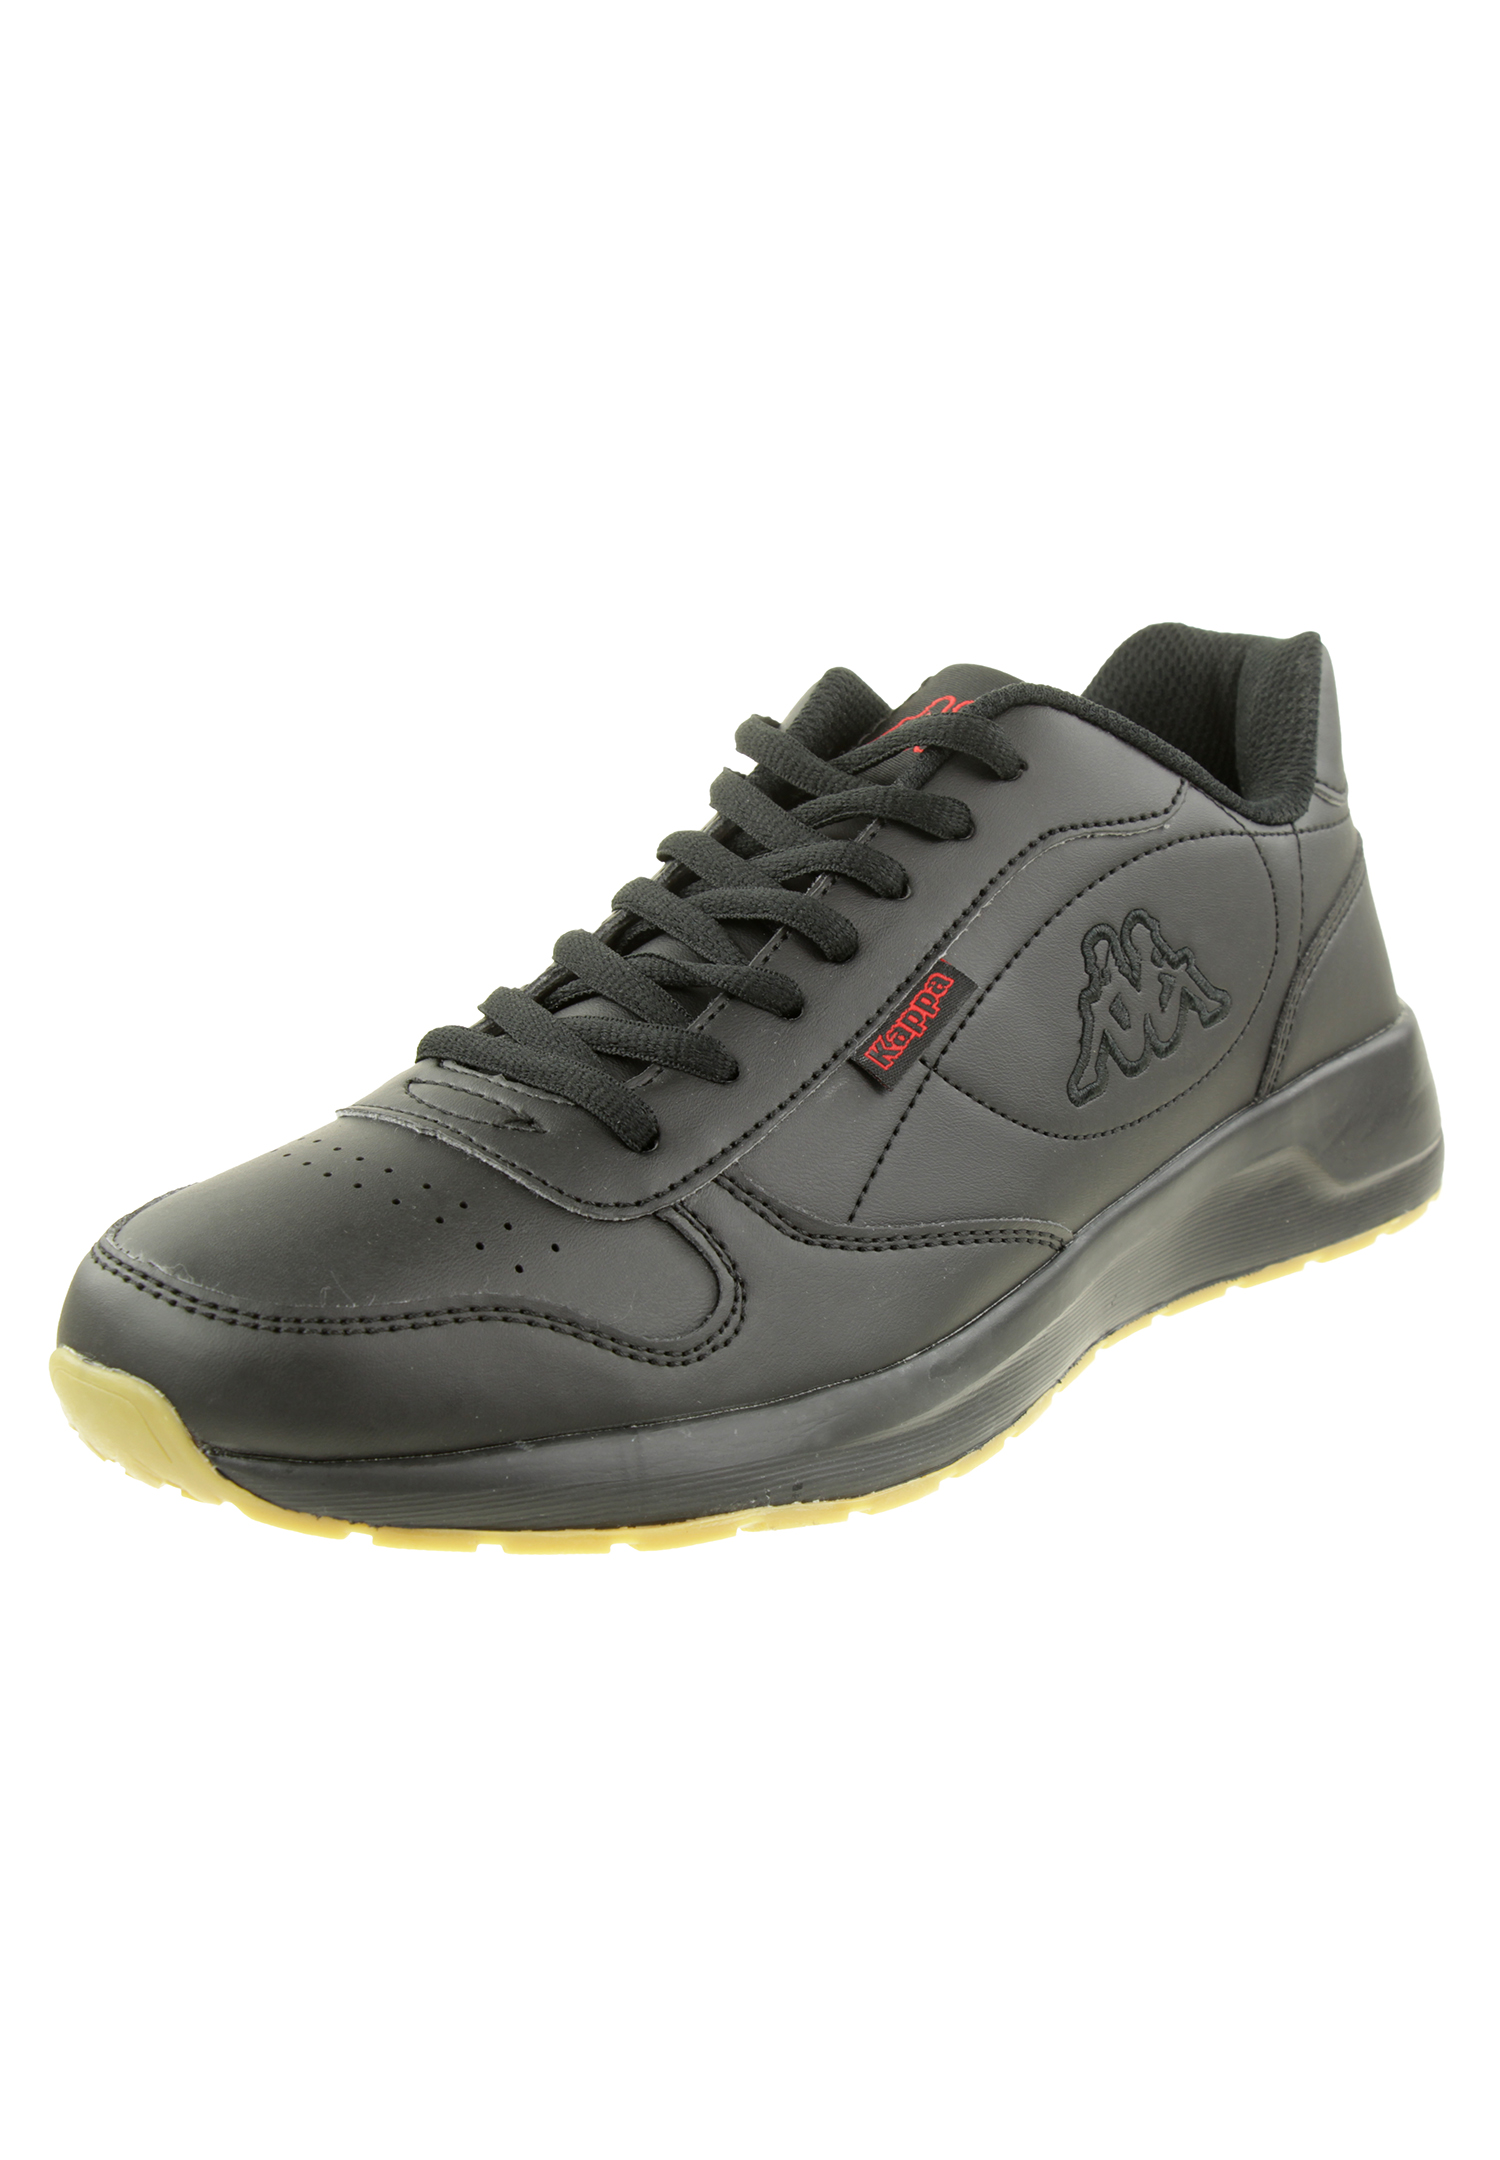 Kappa Unisex-Erwachsene Base II Sneaker, Schwarz (Black 1111), 38 EU